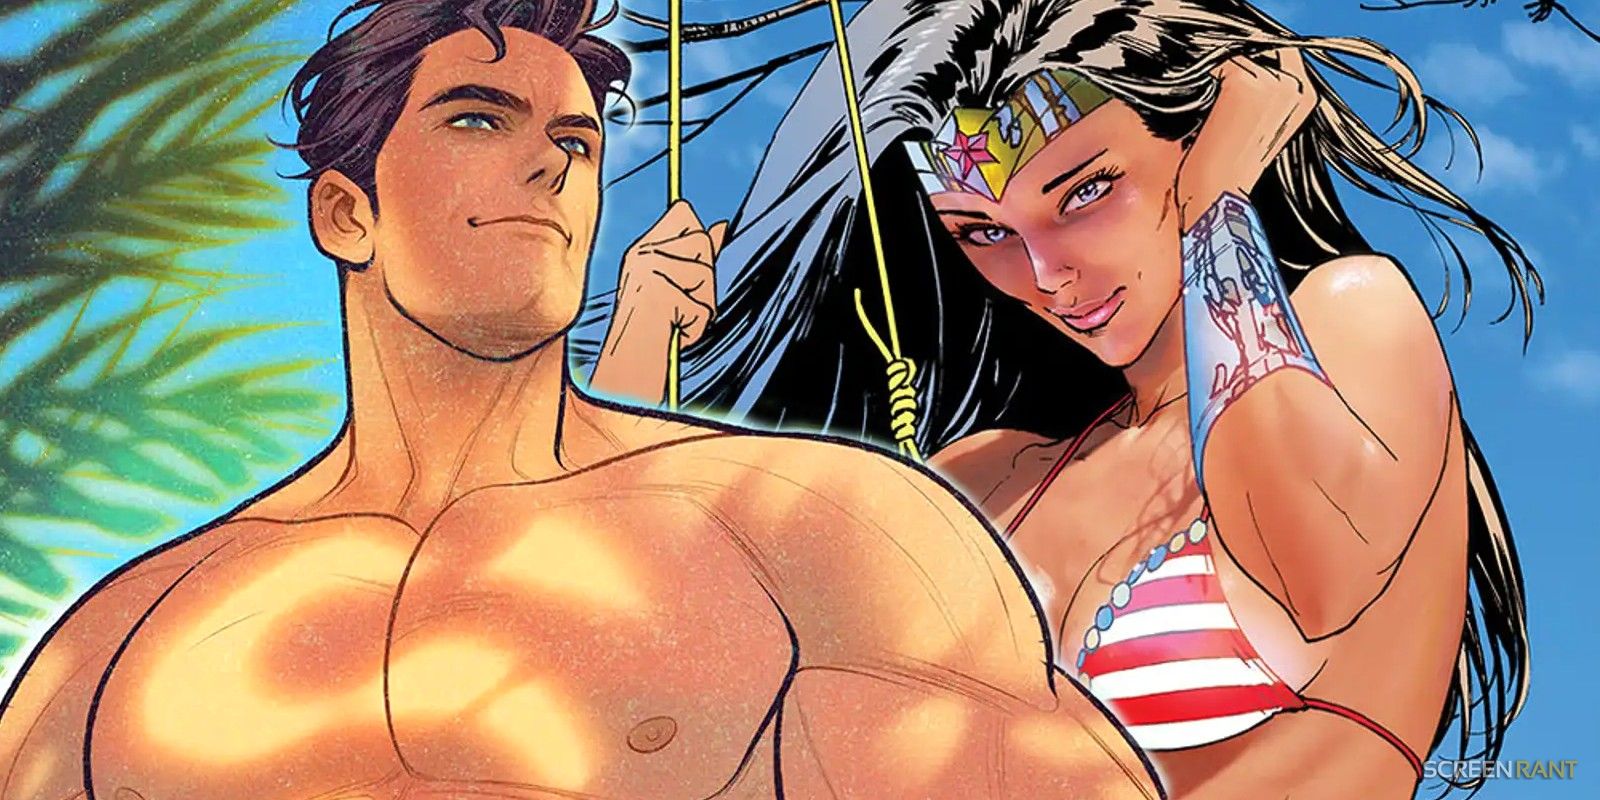 Comic book art: shirtless Superman and Wonder Woman in a bikini.